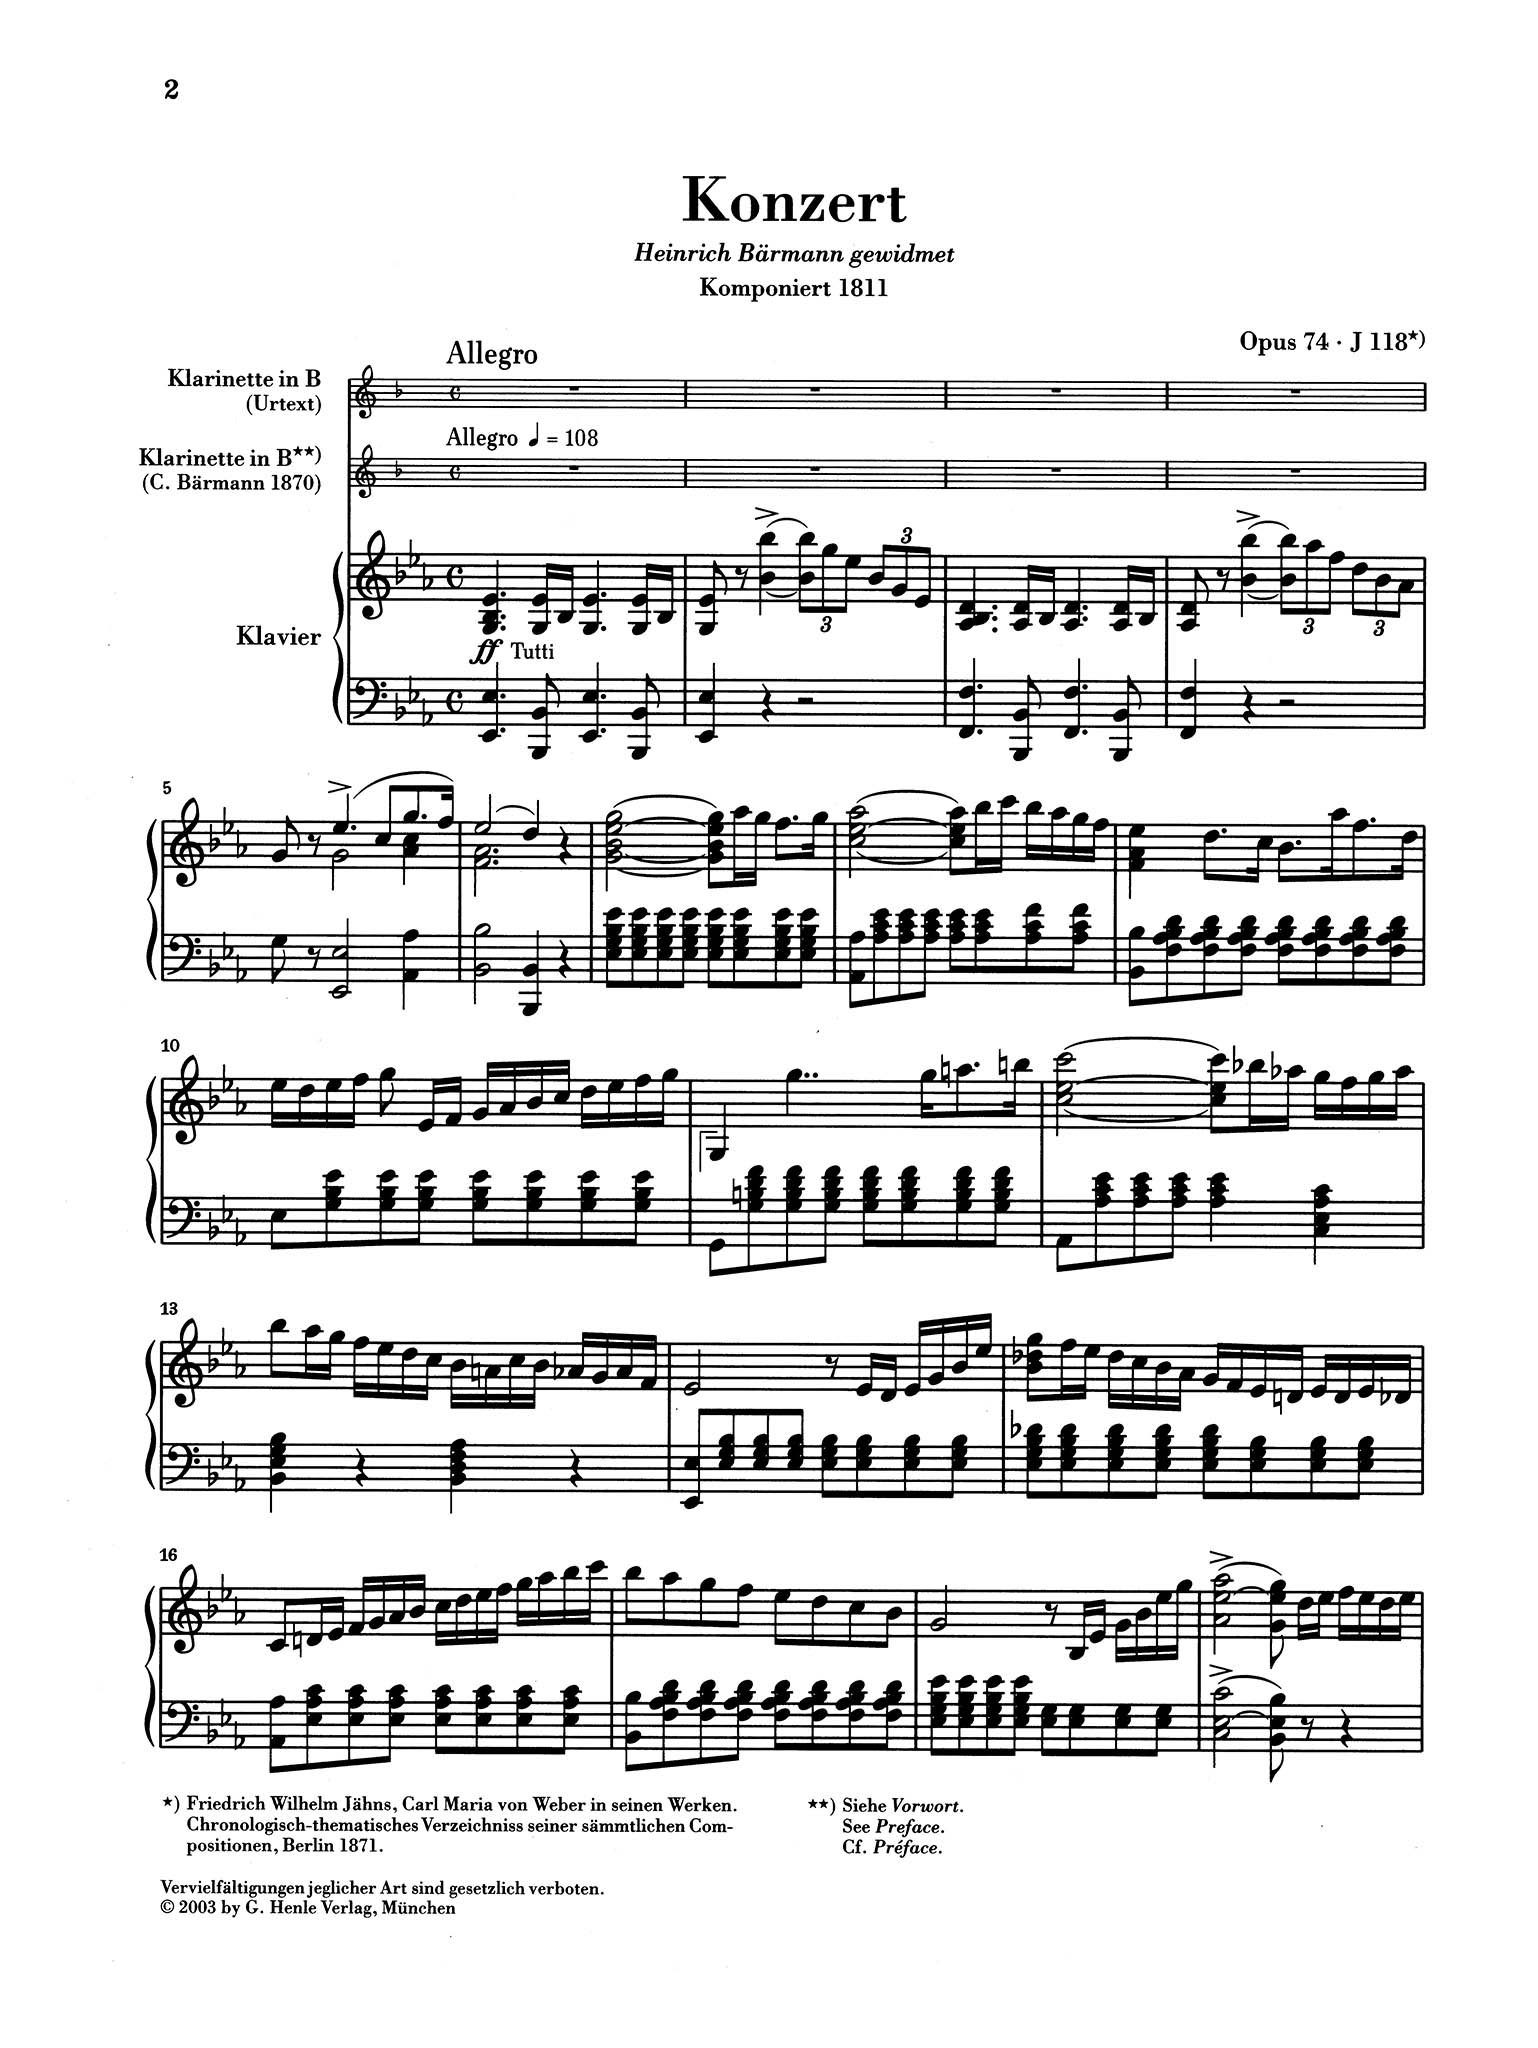 Clarinet Concerto No. 2 in E-flat Major, Op. 74 - Movement 1